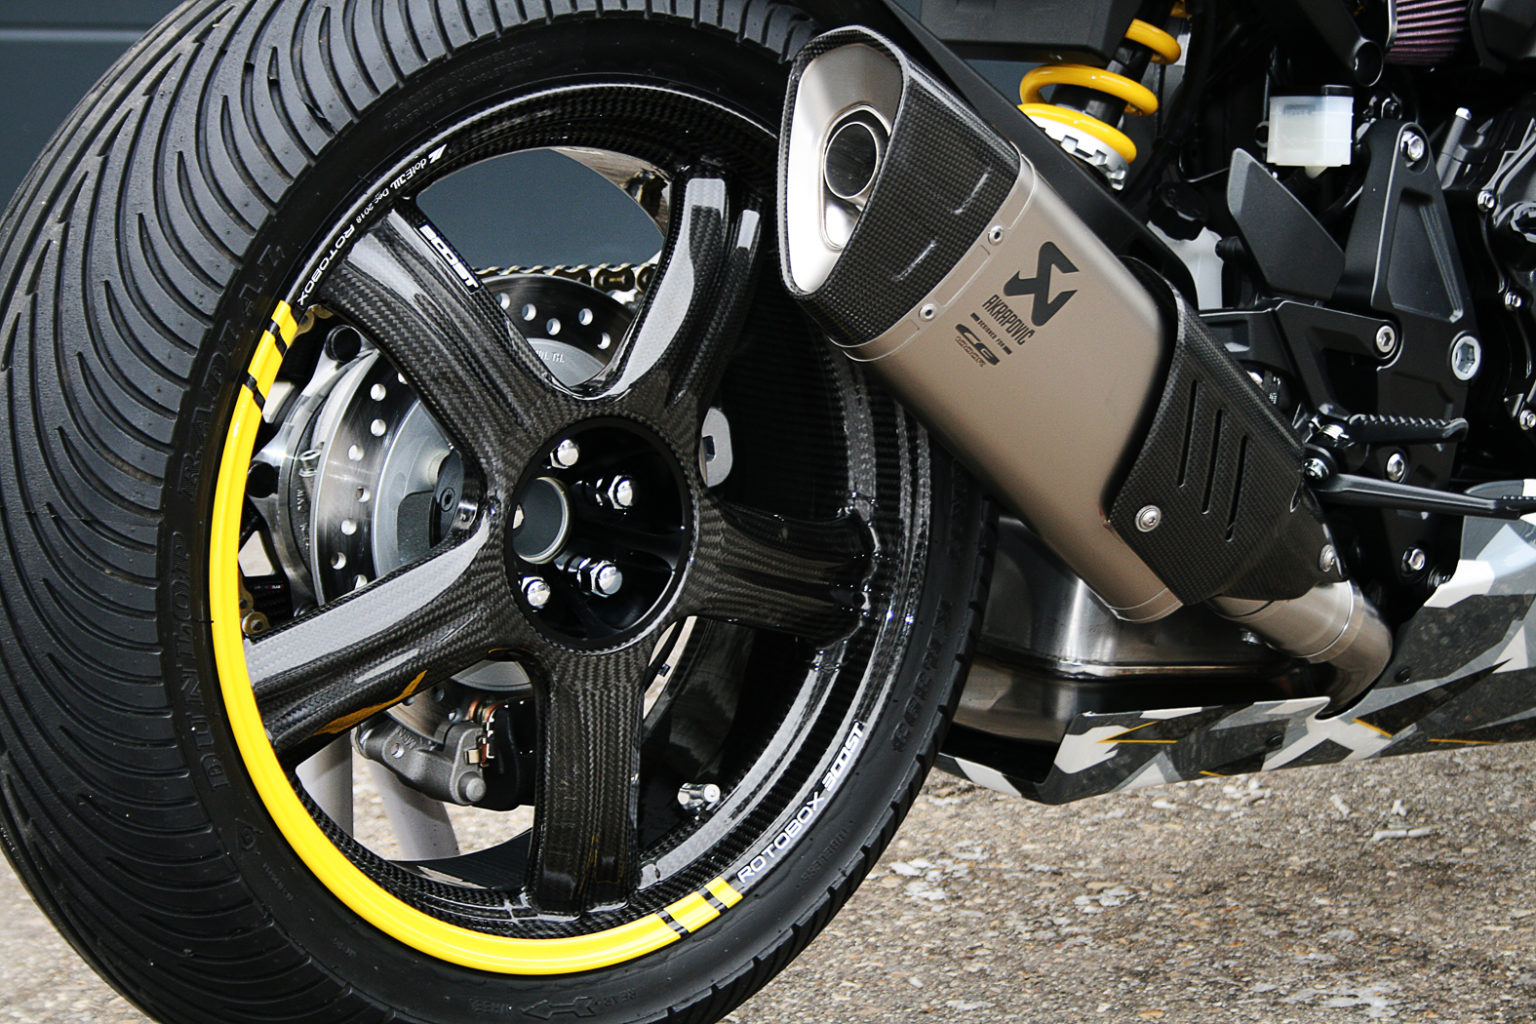 Honda CB1000R-adical by Gannet Design